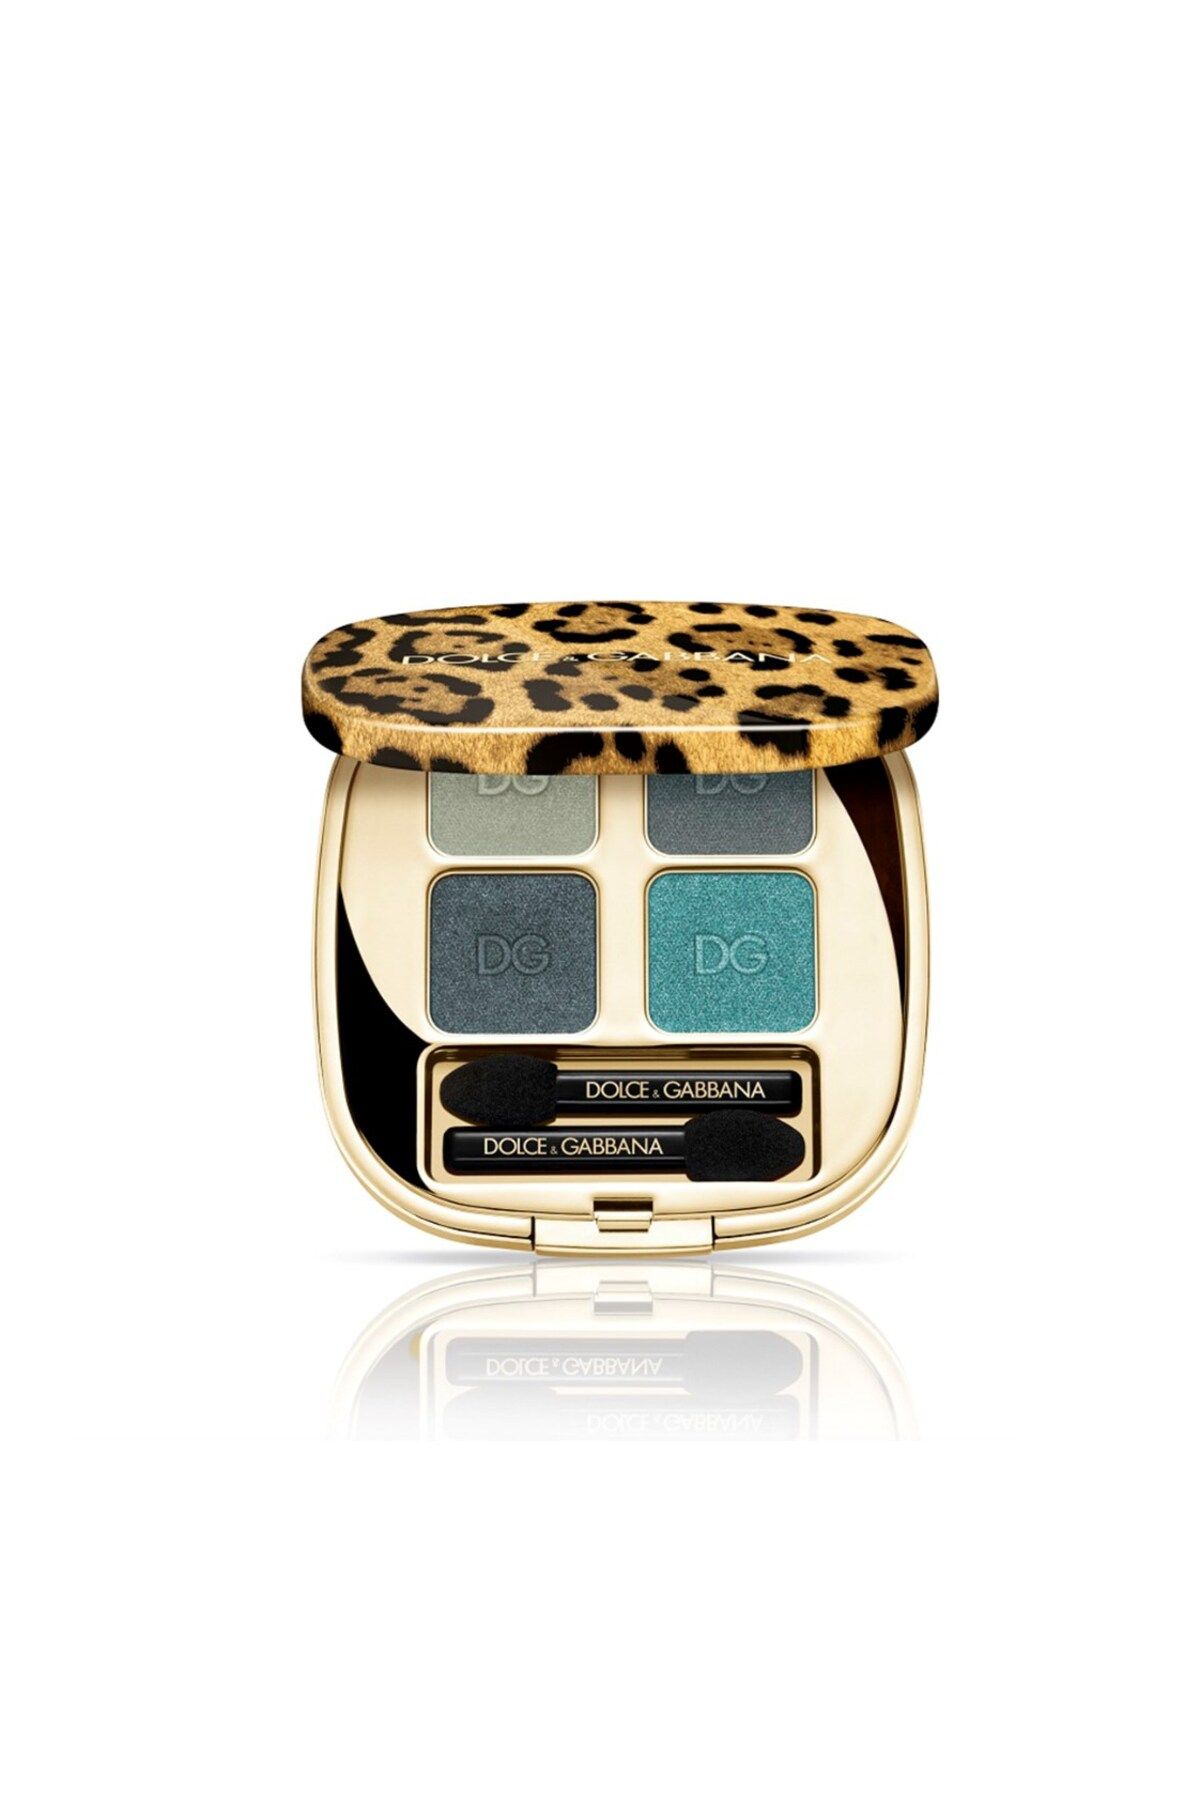 Dolce &Gabbana Felıneyes Intense EyeshadowQuad Medıterranean Blu